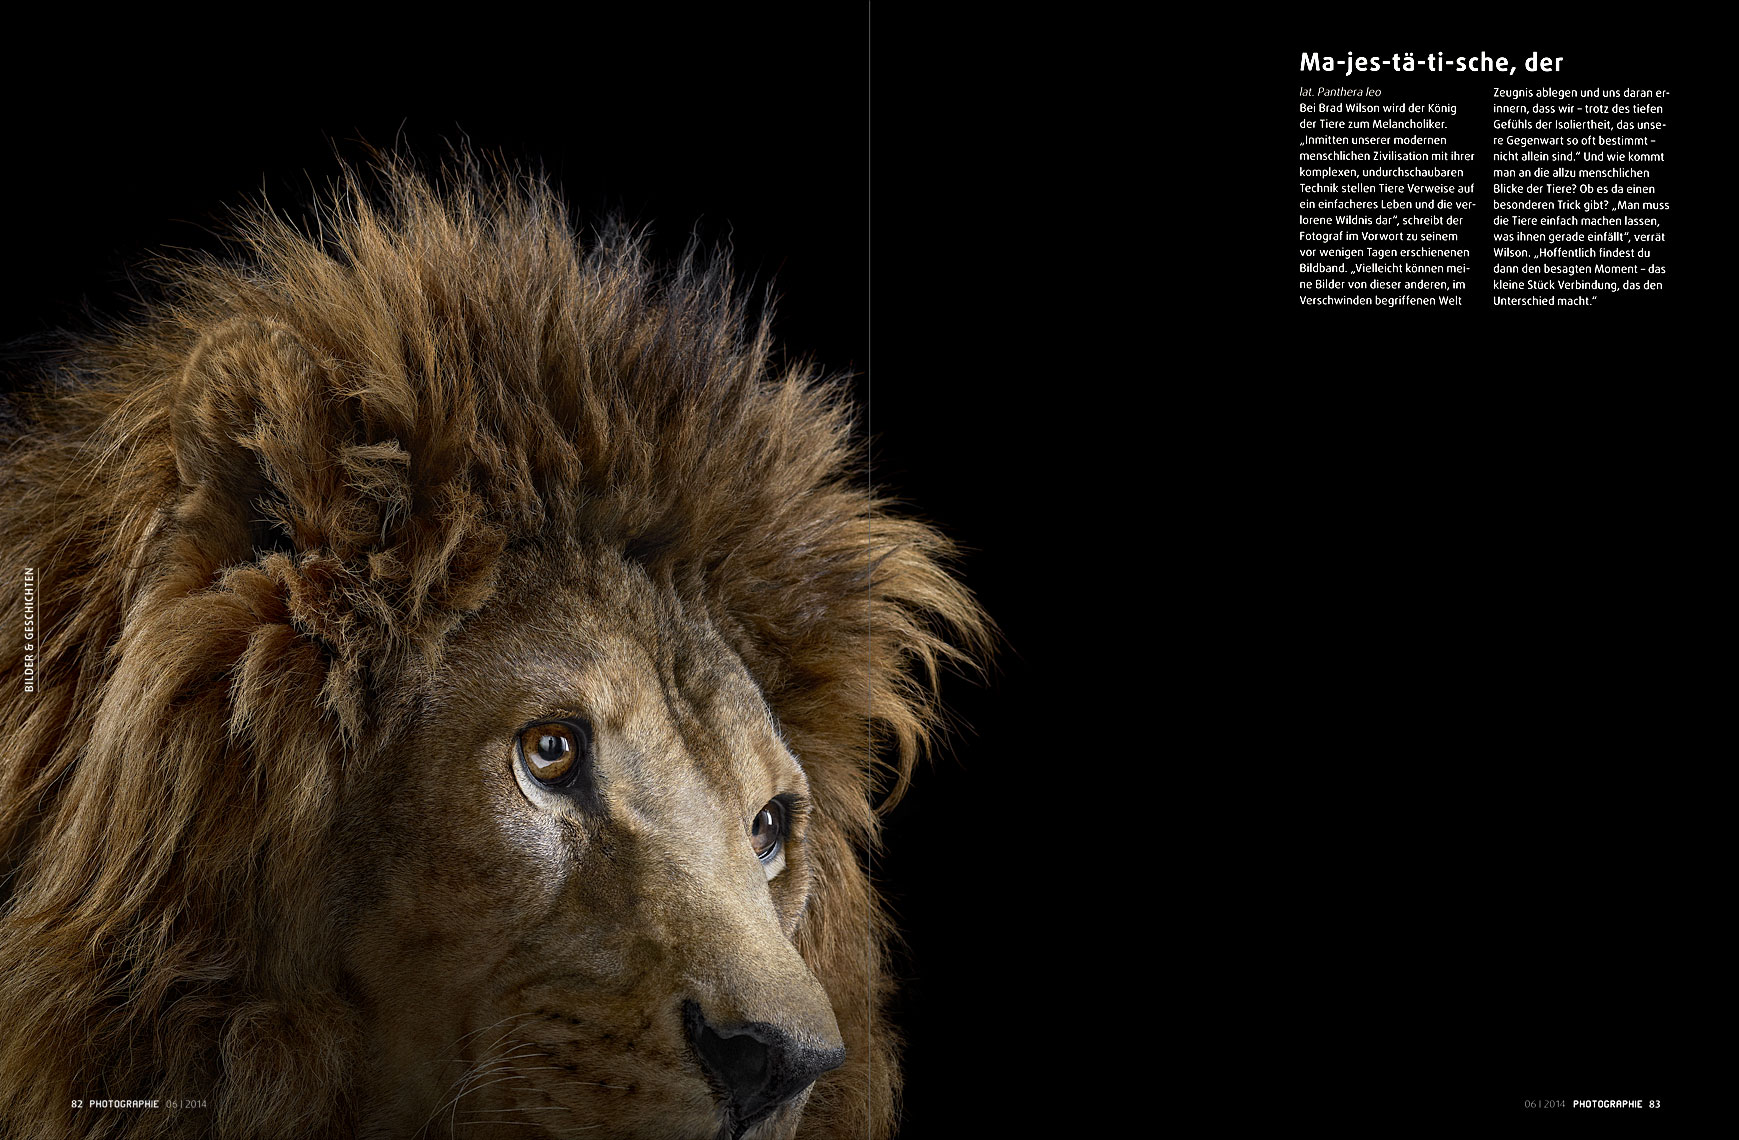 Photographie Magazine article about wildlife photographer Brad Wilson